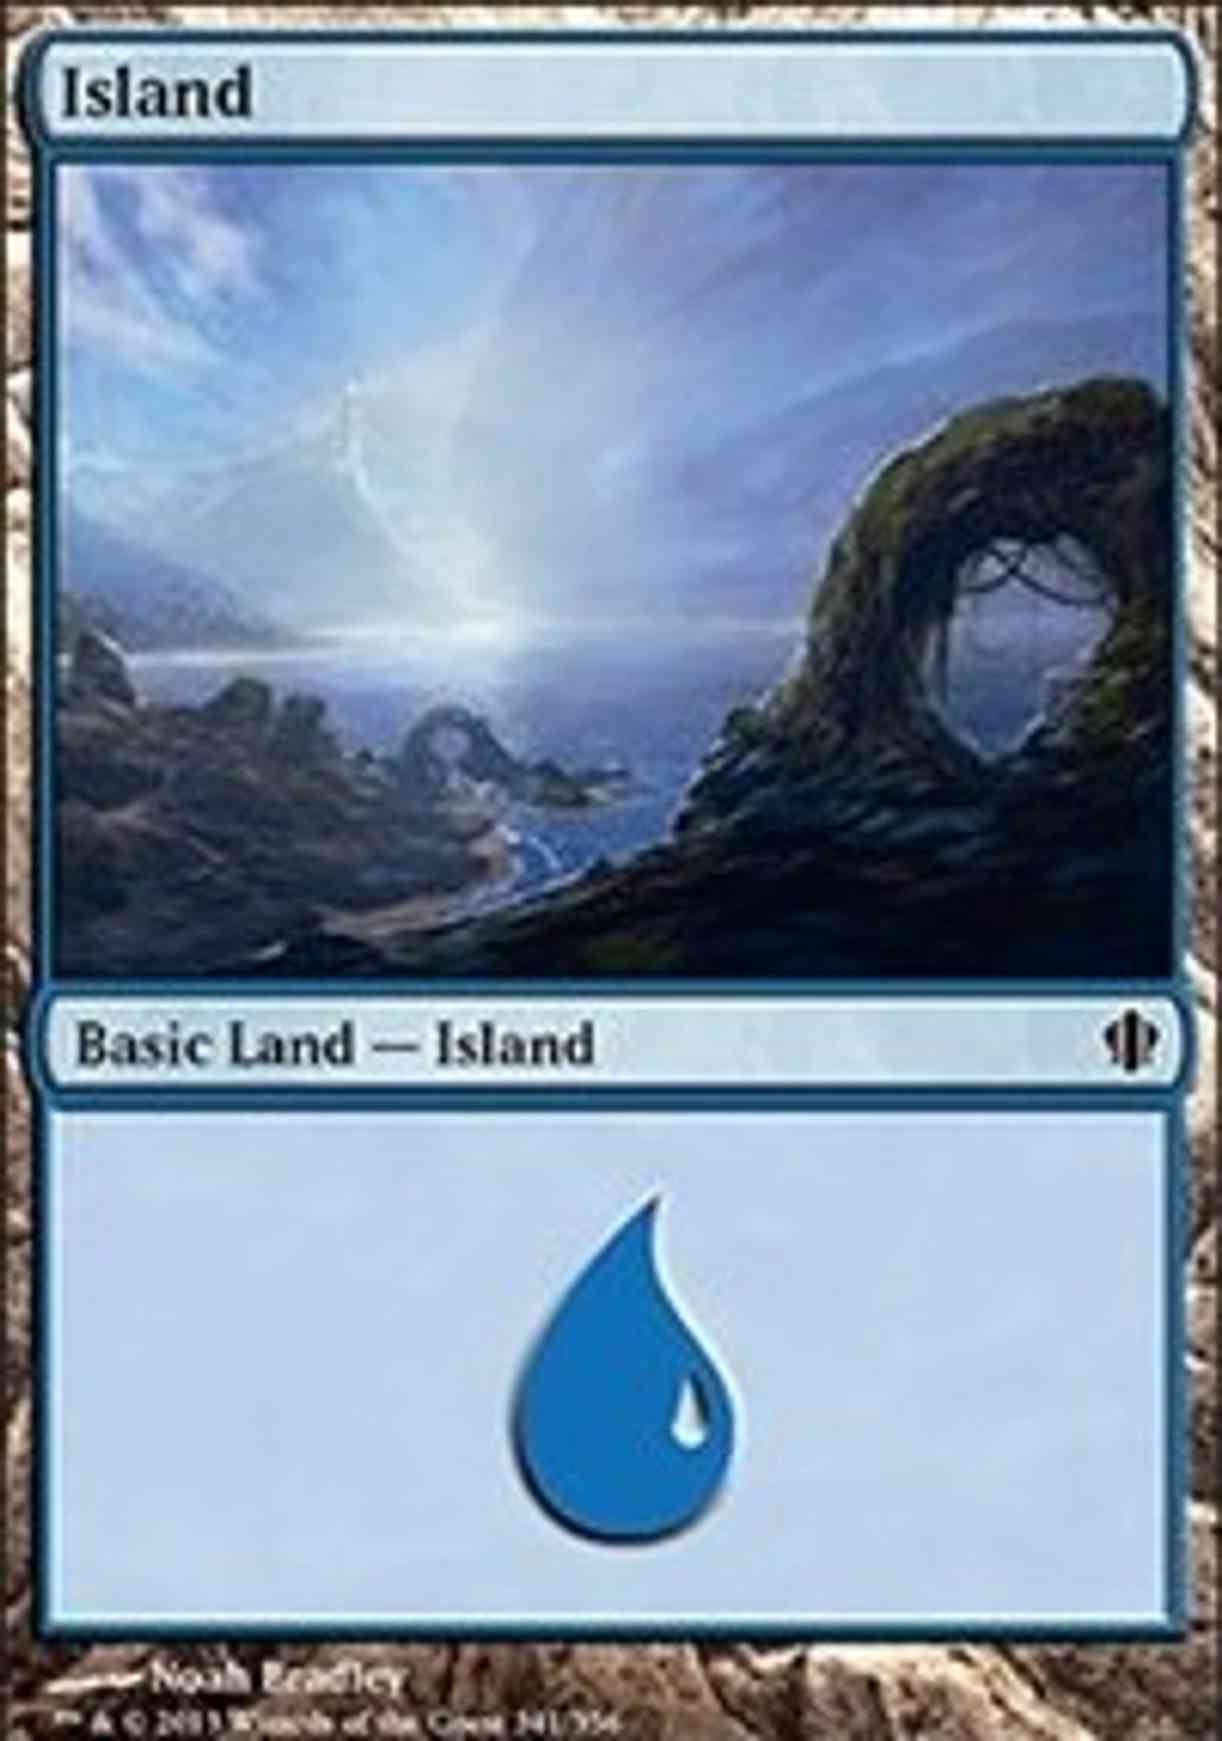 Island (341) magic card front